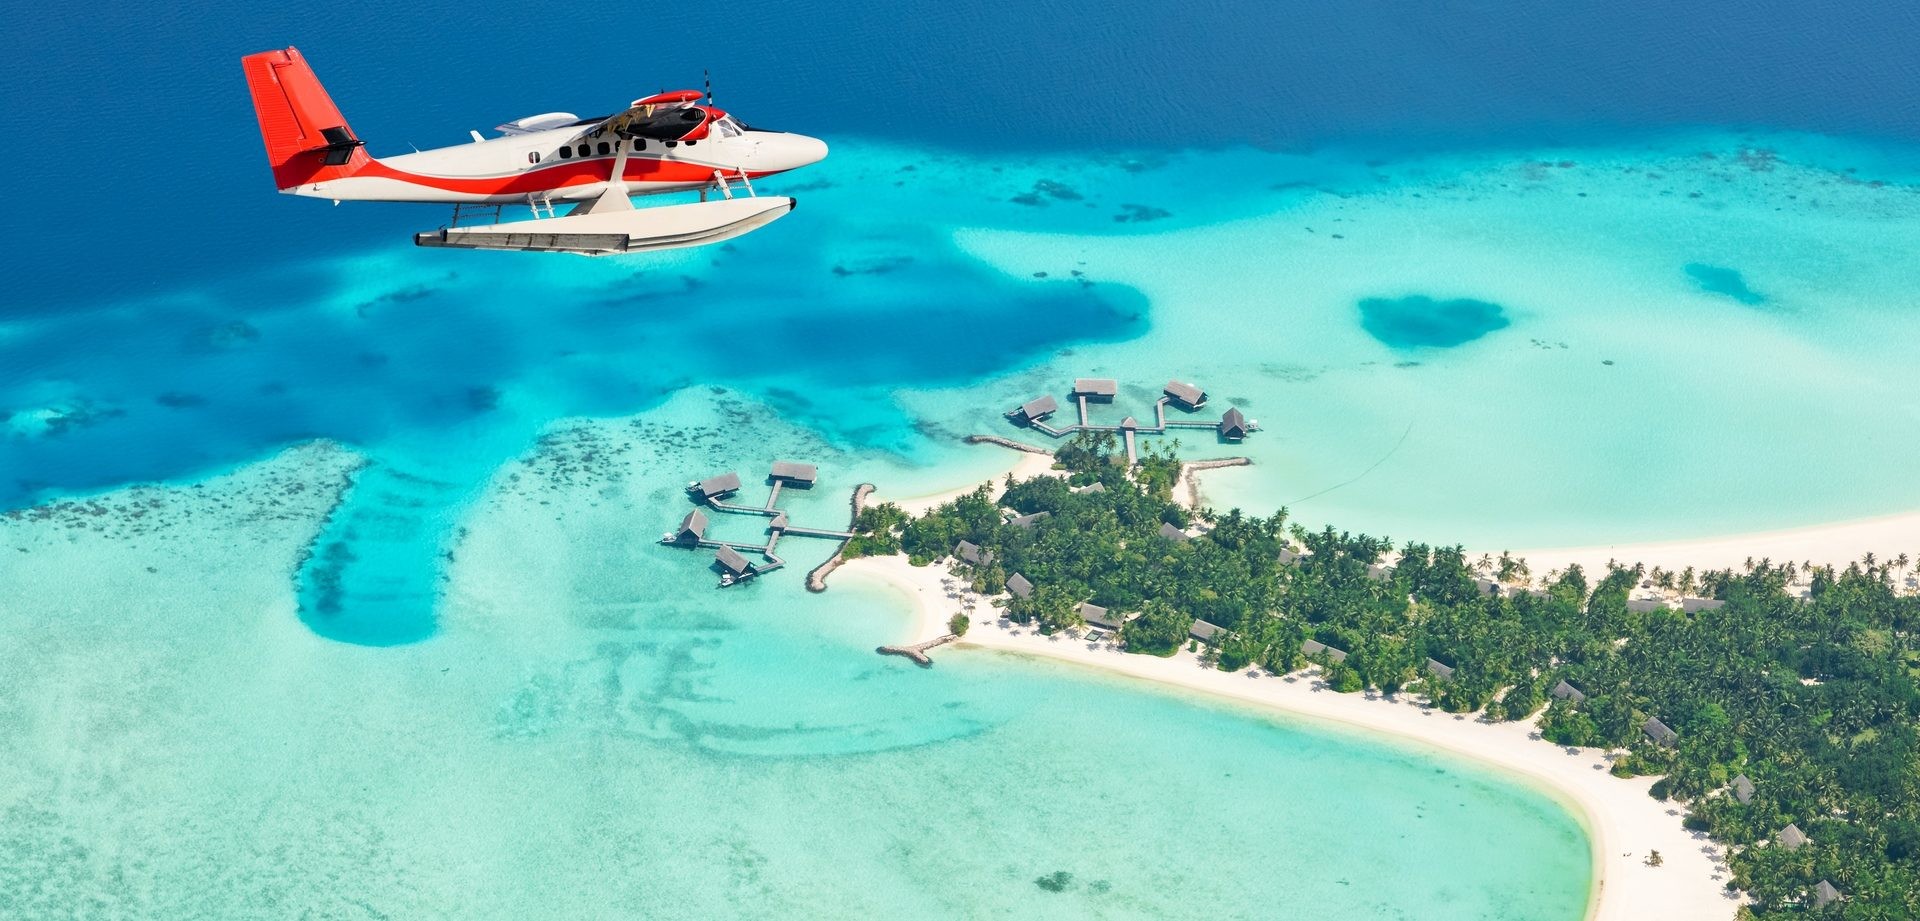 Maldives, Indian Ocean: Catamaran cruise